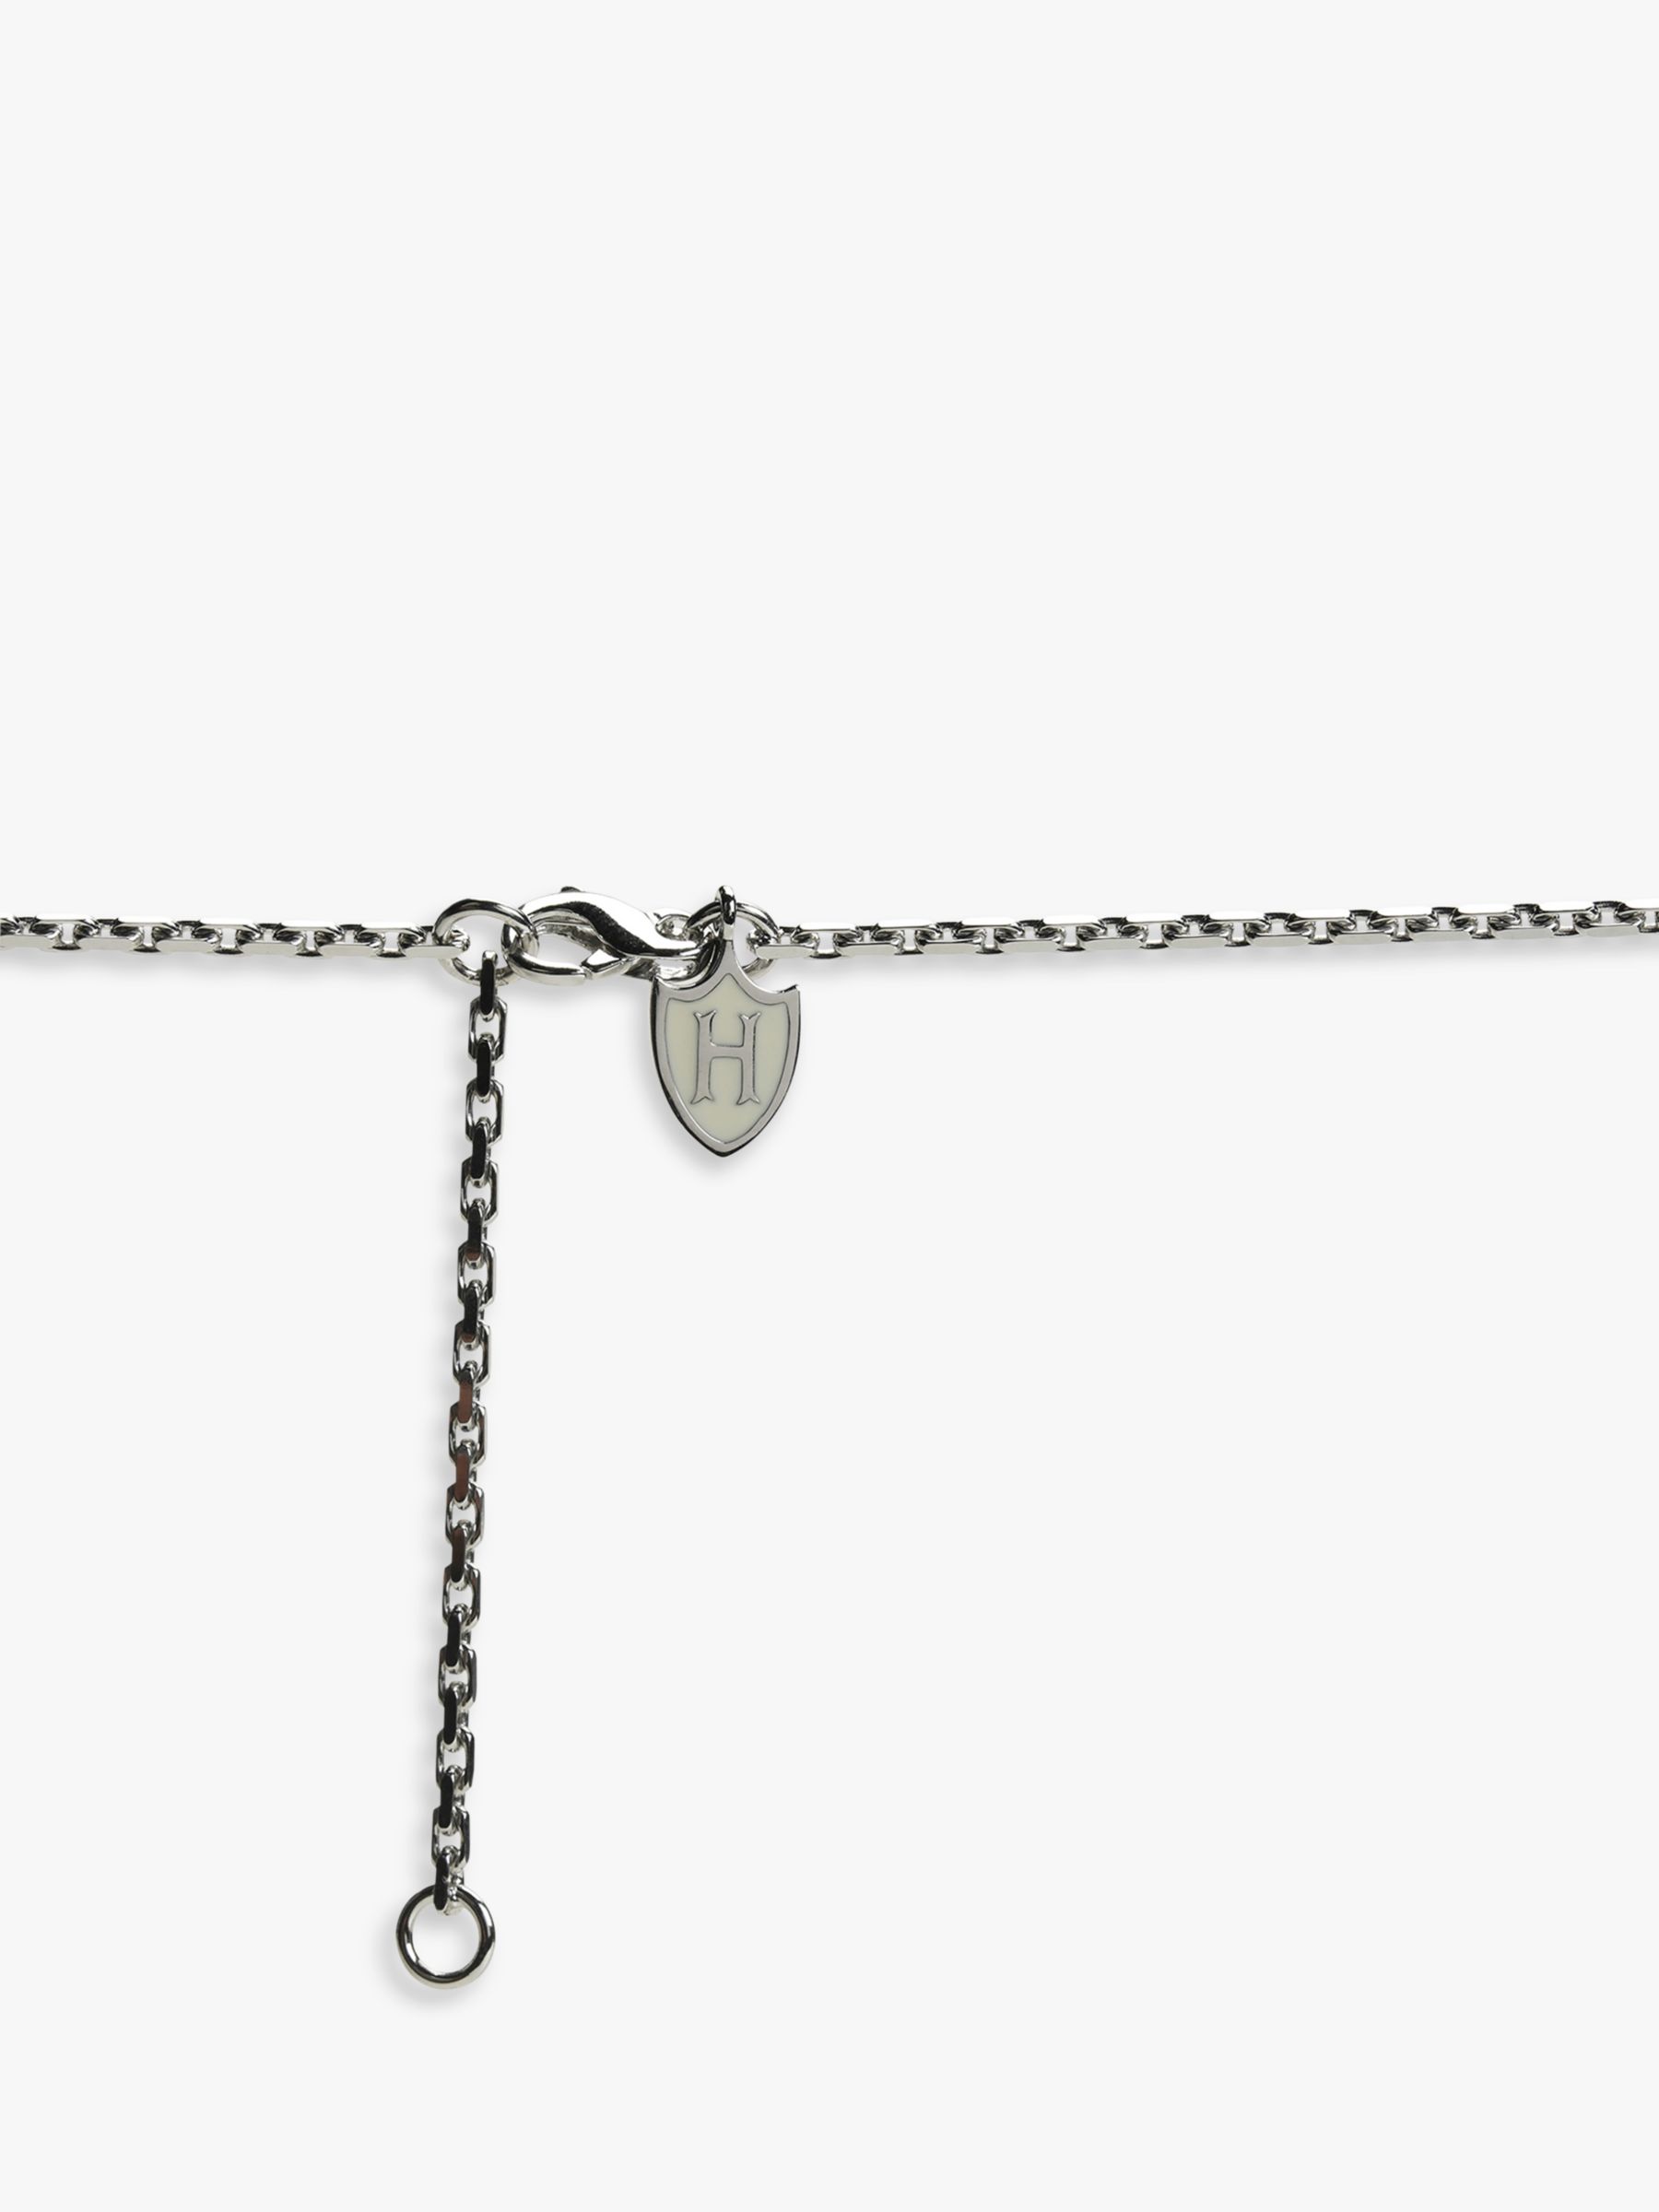 Buy Hoxton London Men's Herringbone Rectangle Pendant Necklace, Silver Online at johnlewis.com